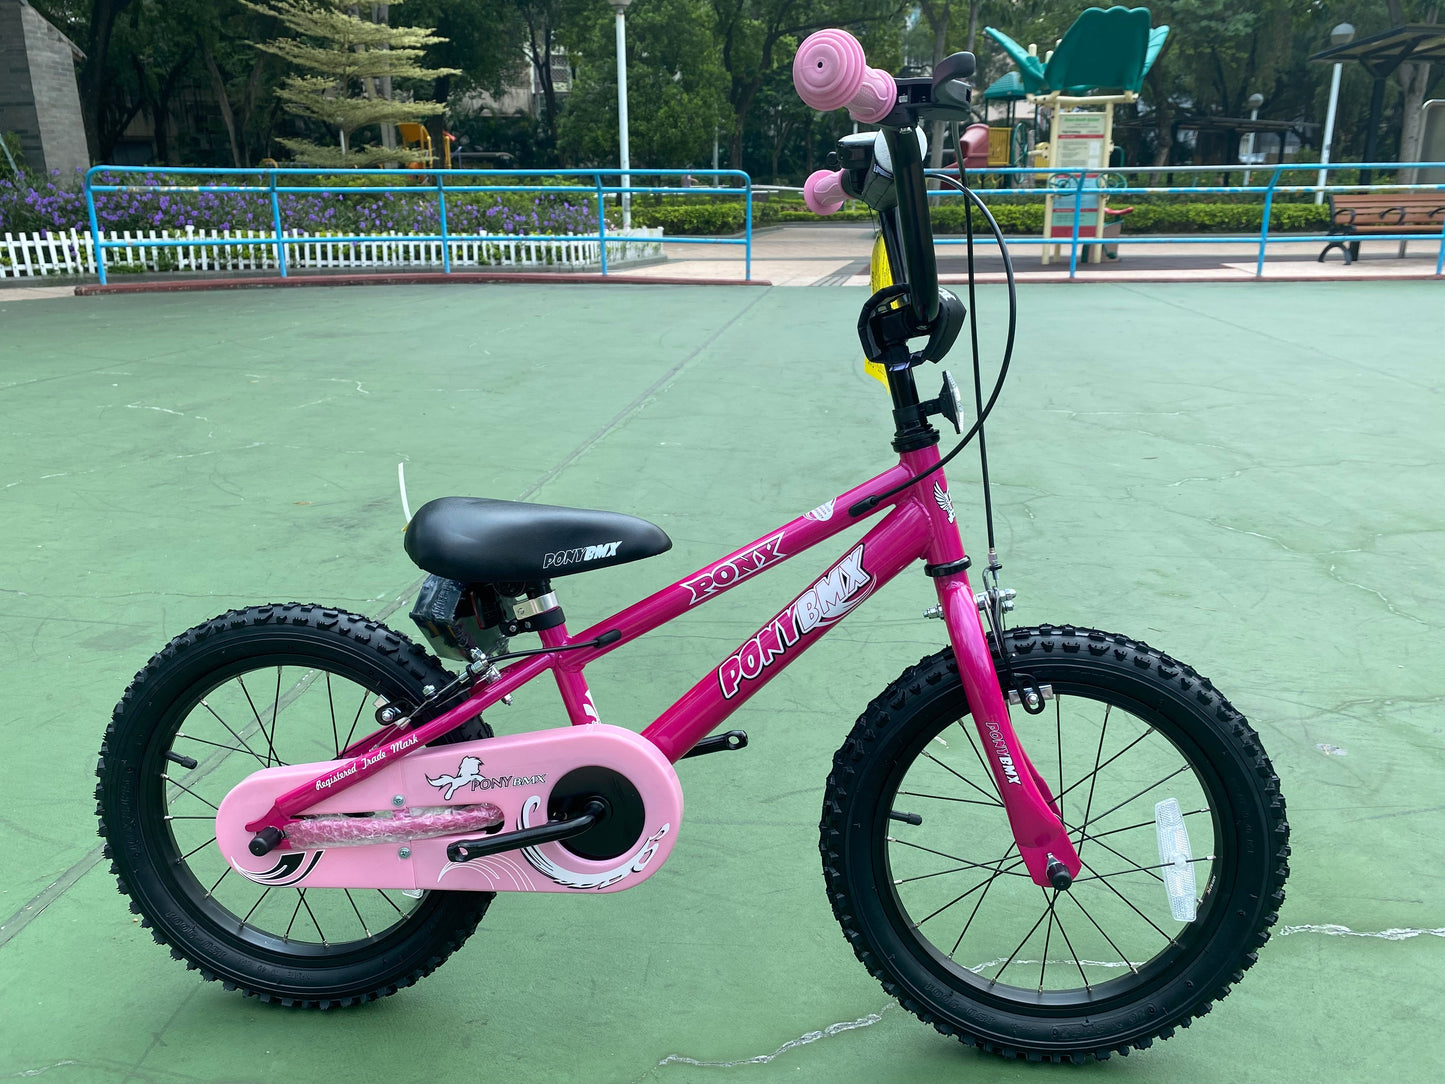 PONY new ST-type child bike - 18" / PONY ST-TYPE KID BIKE - 18"